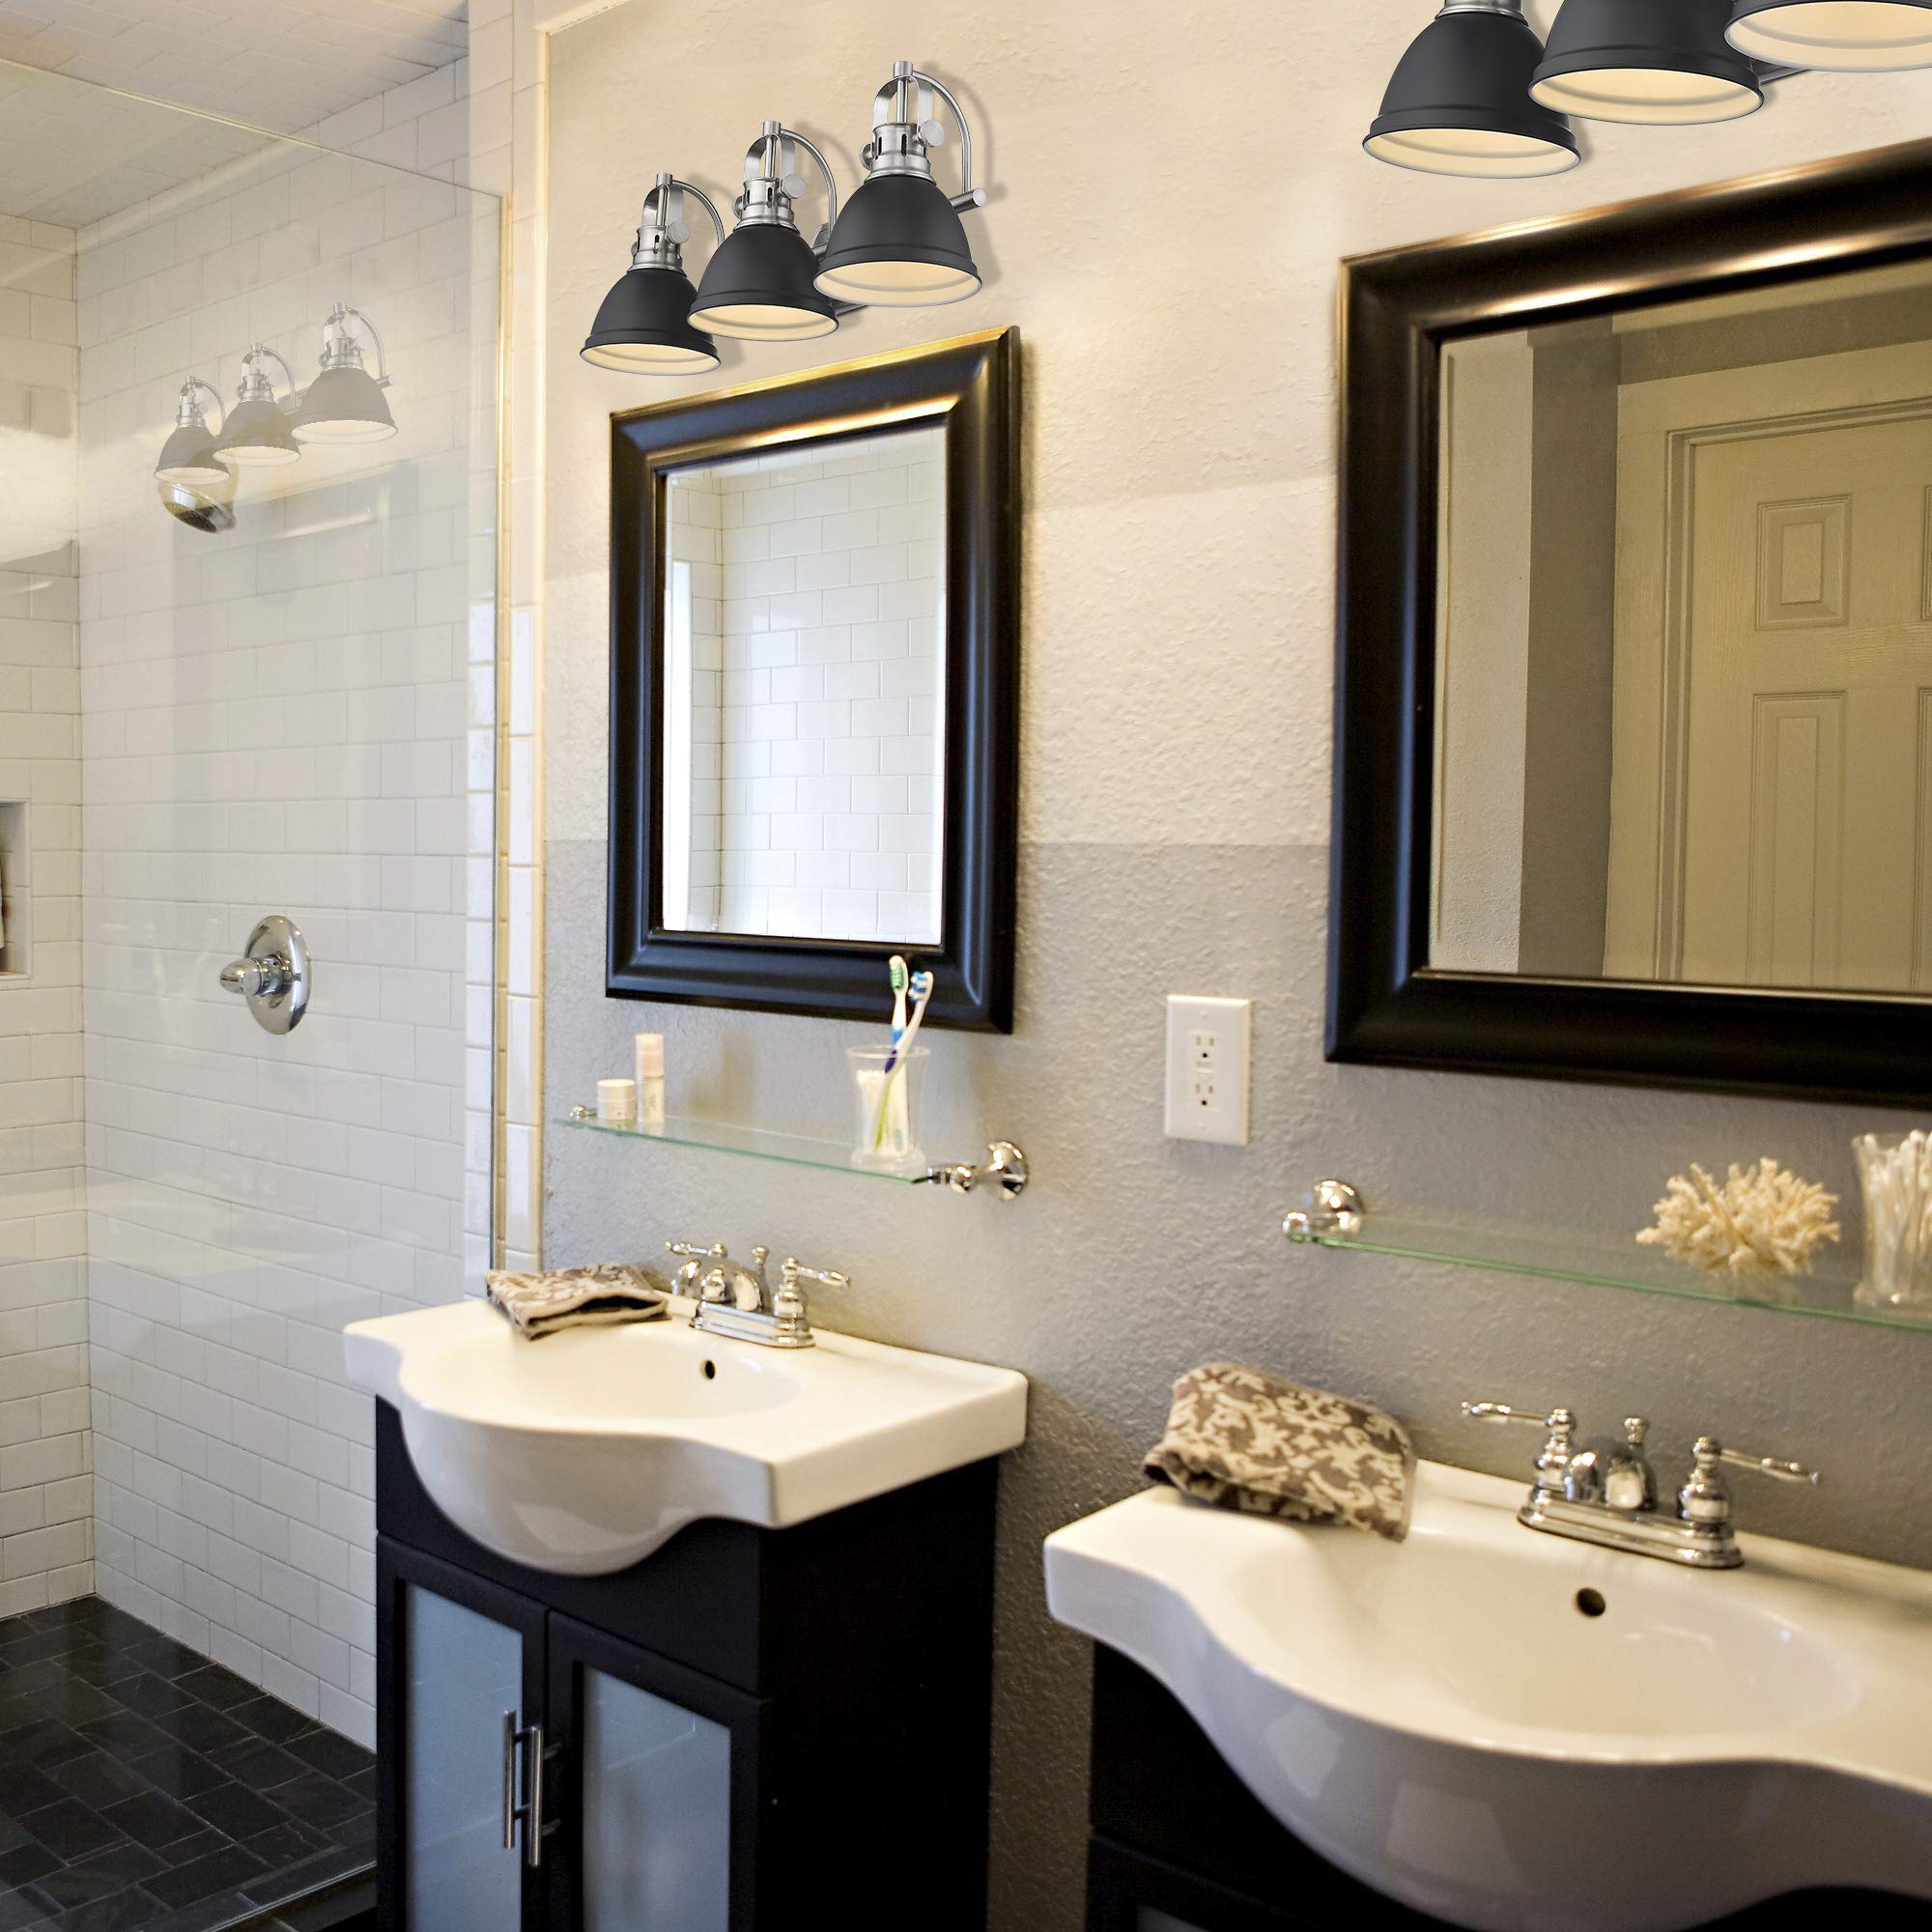 Emliviar 3-Light Bathroom Vanity Light Fixture, Black Finish with Metal Shade, 4054H-A